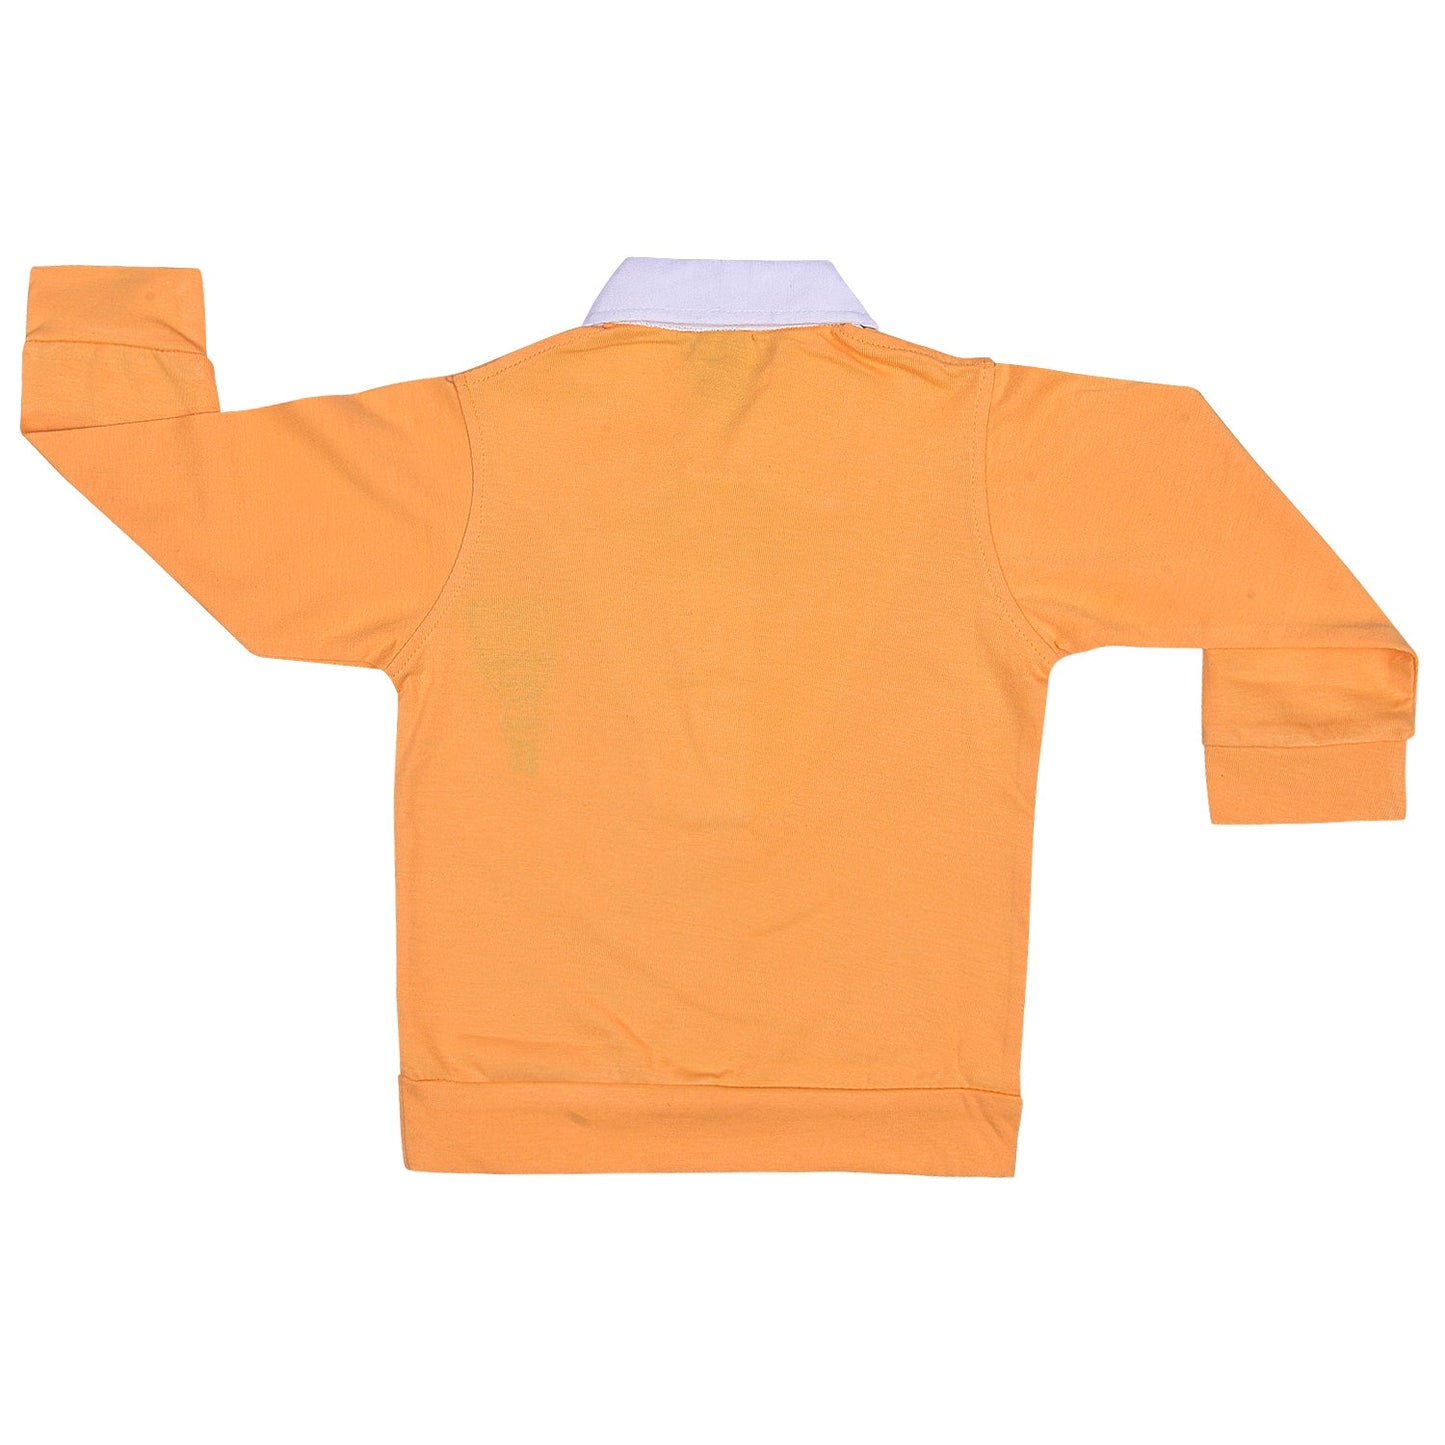 Wish Karo Cotton Clothing Set for Baby Boys hfs598y